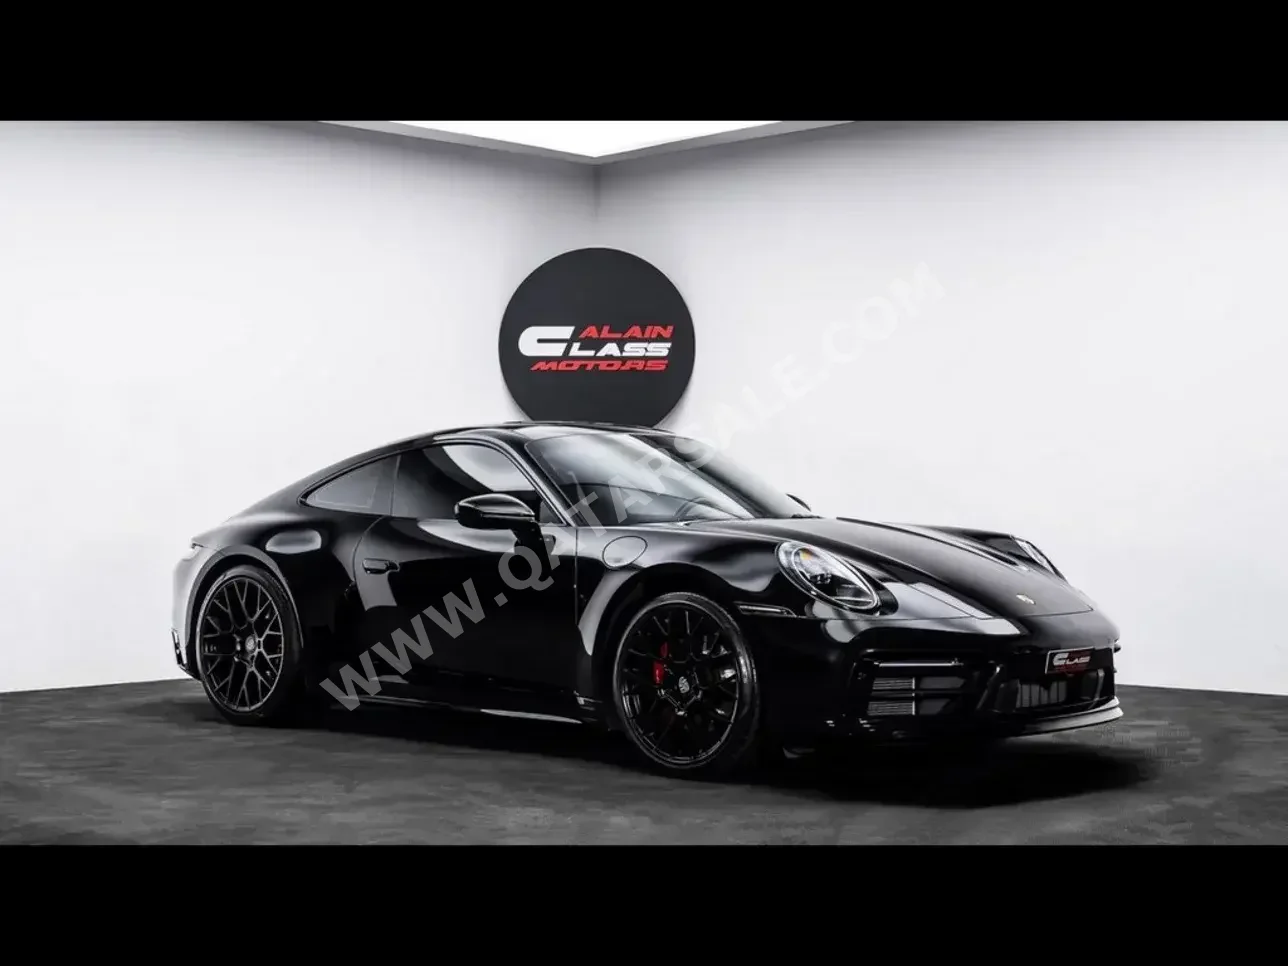 Porsche  911  Carrera 4S  2021  Automatic  35,432 Km  6 Cylinder  Rear Wheel Drive (RWD)  Coupe / Sport  Black  With Warranty